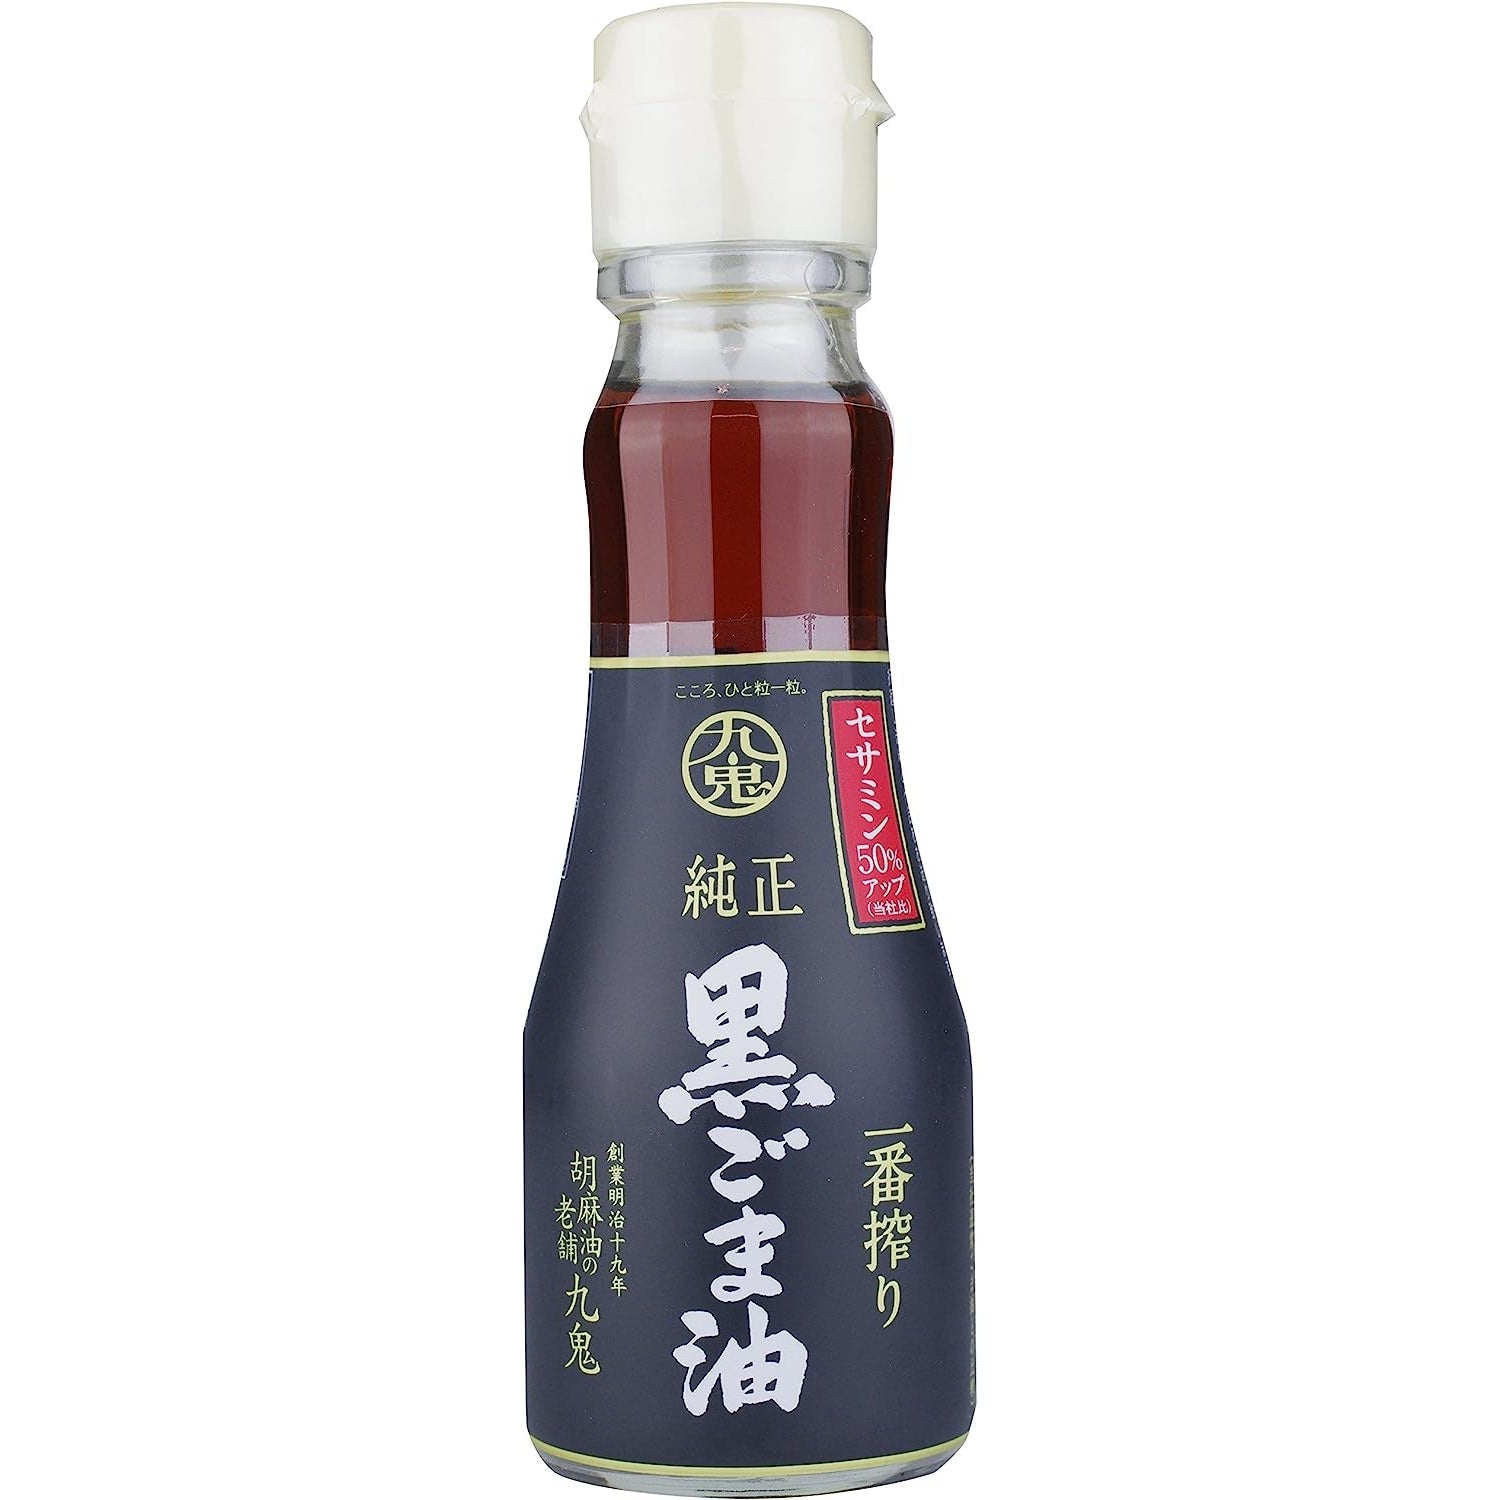 Kuki High Sesamin Pure Pressed Black Sesame Oil 150g